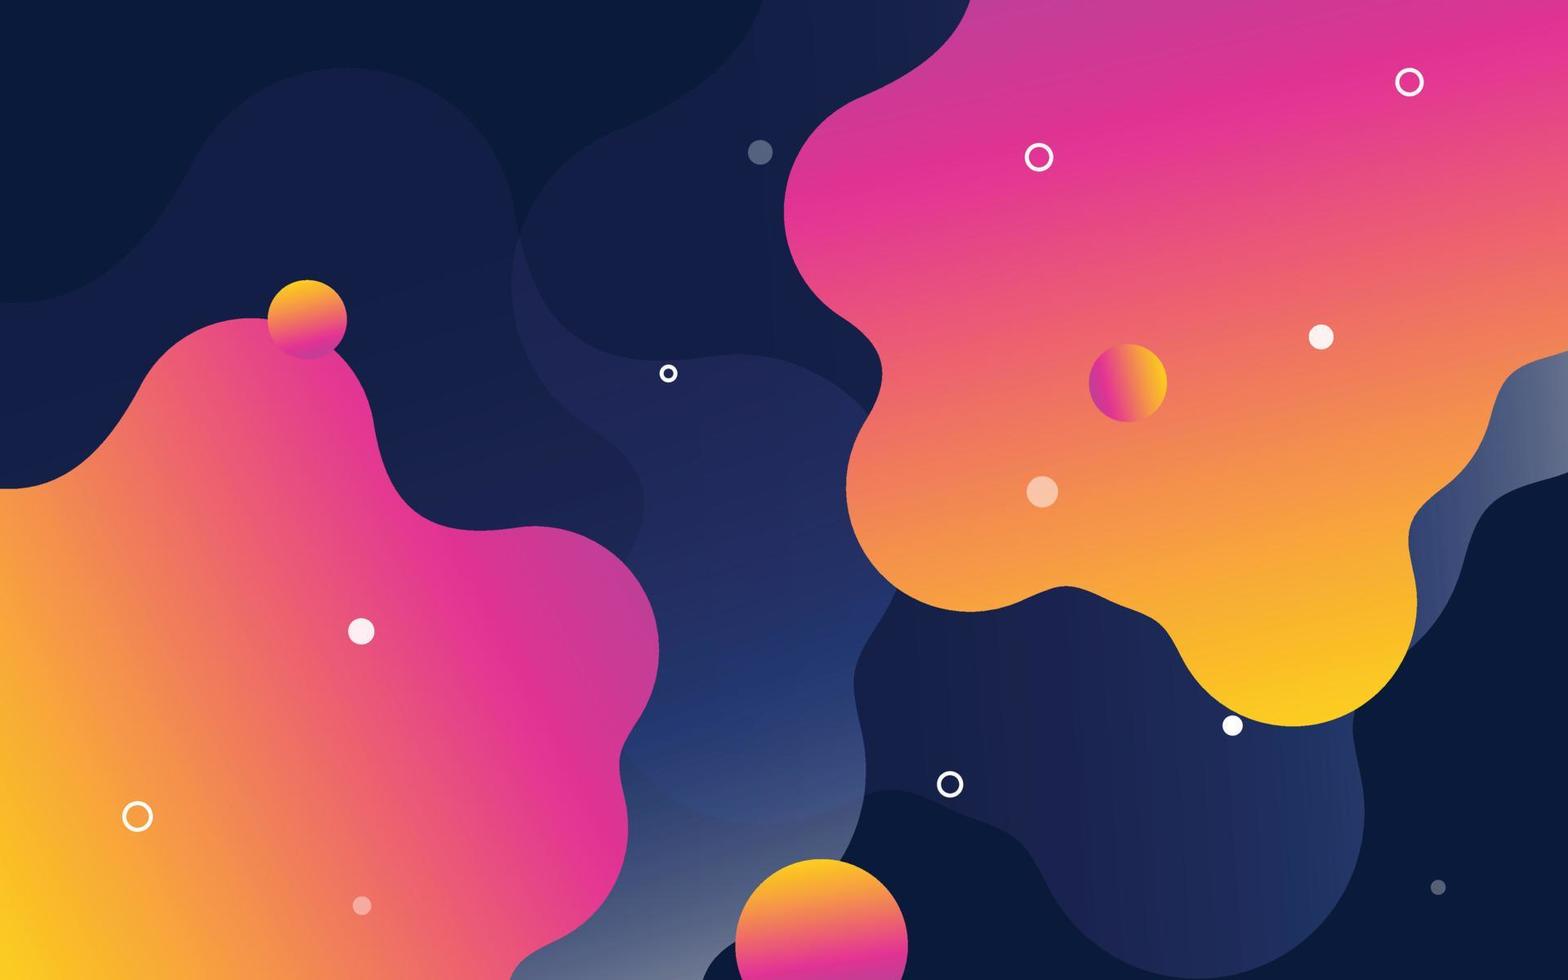 manchas líquidas flotantes. banner colorido abstracto con formas fluidas. composición futurista con burbujas. Ilustración de vector 3d para publicidad. marketing o presentación